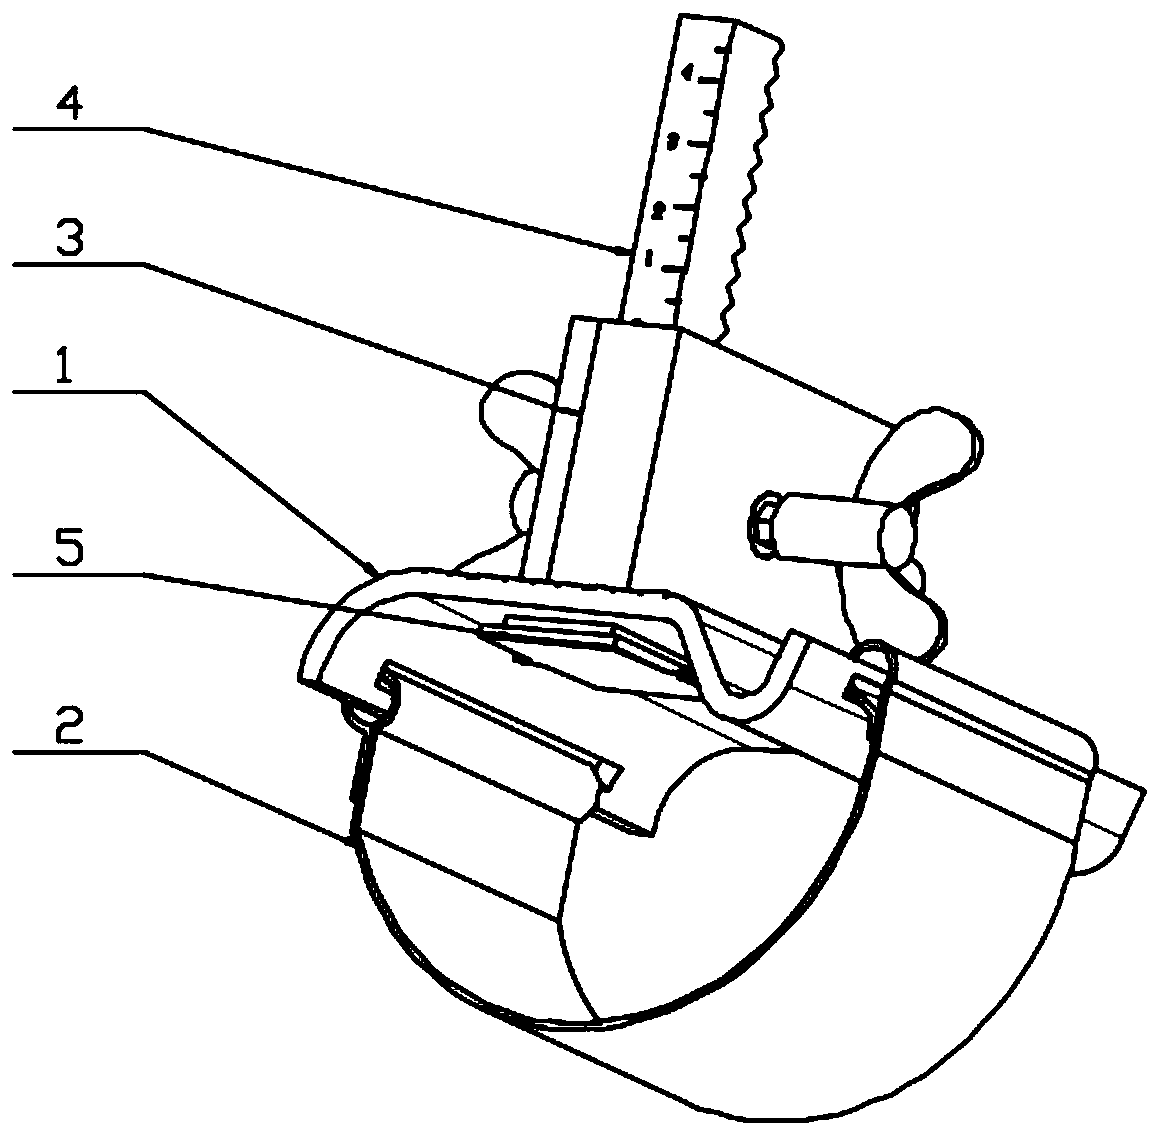 Self-locking radial artery compression hemostat